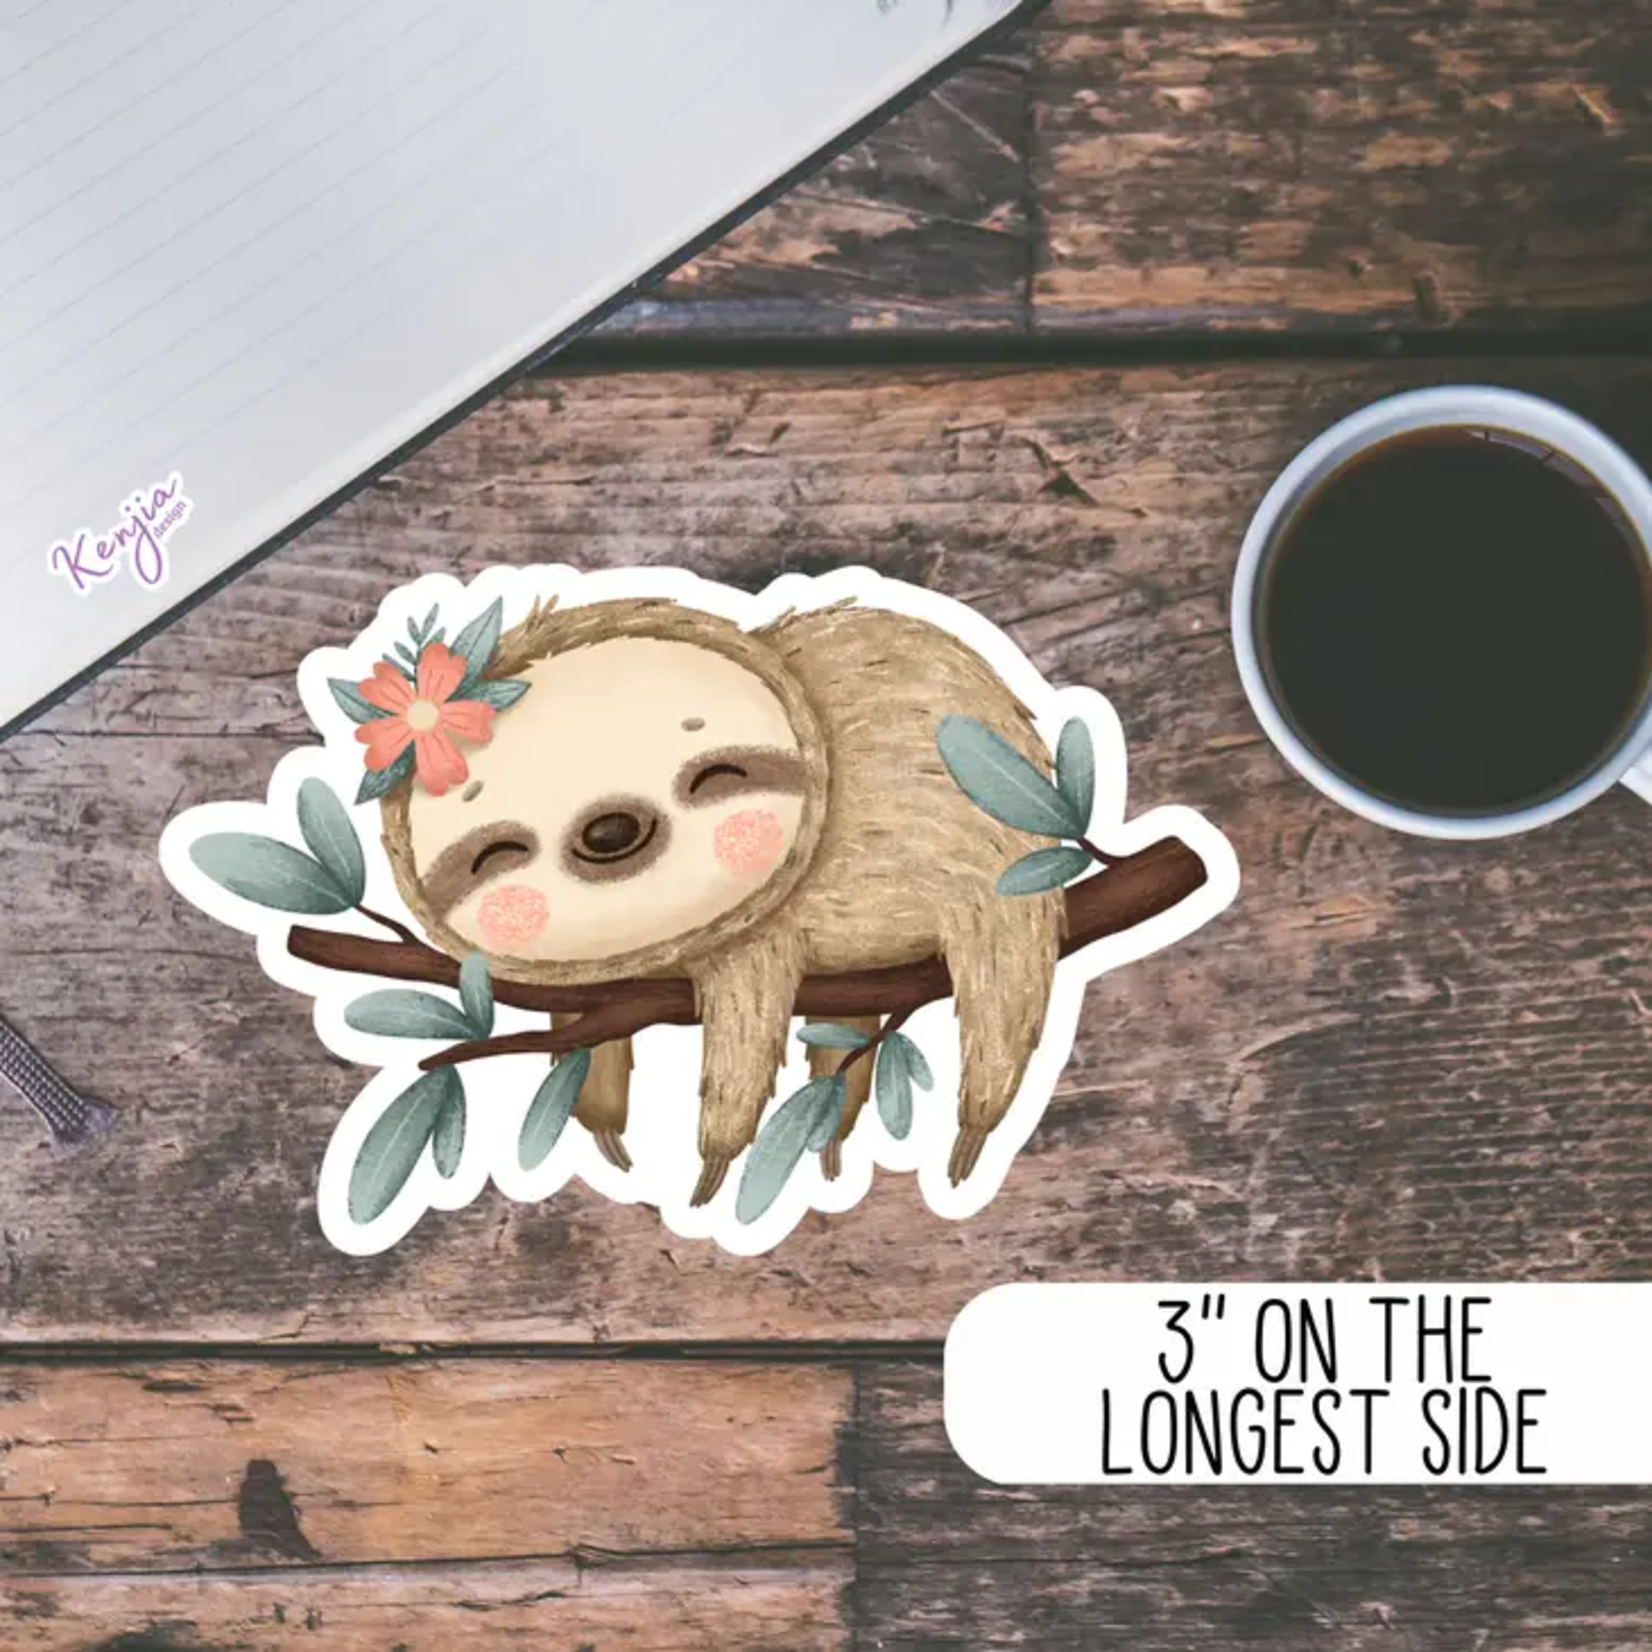 Sleeping Sloth Sticker